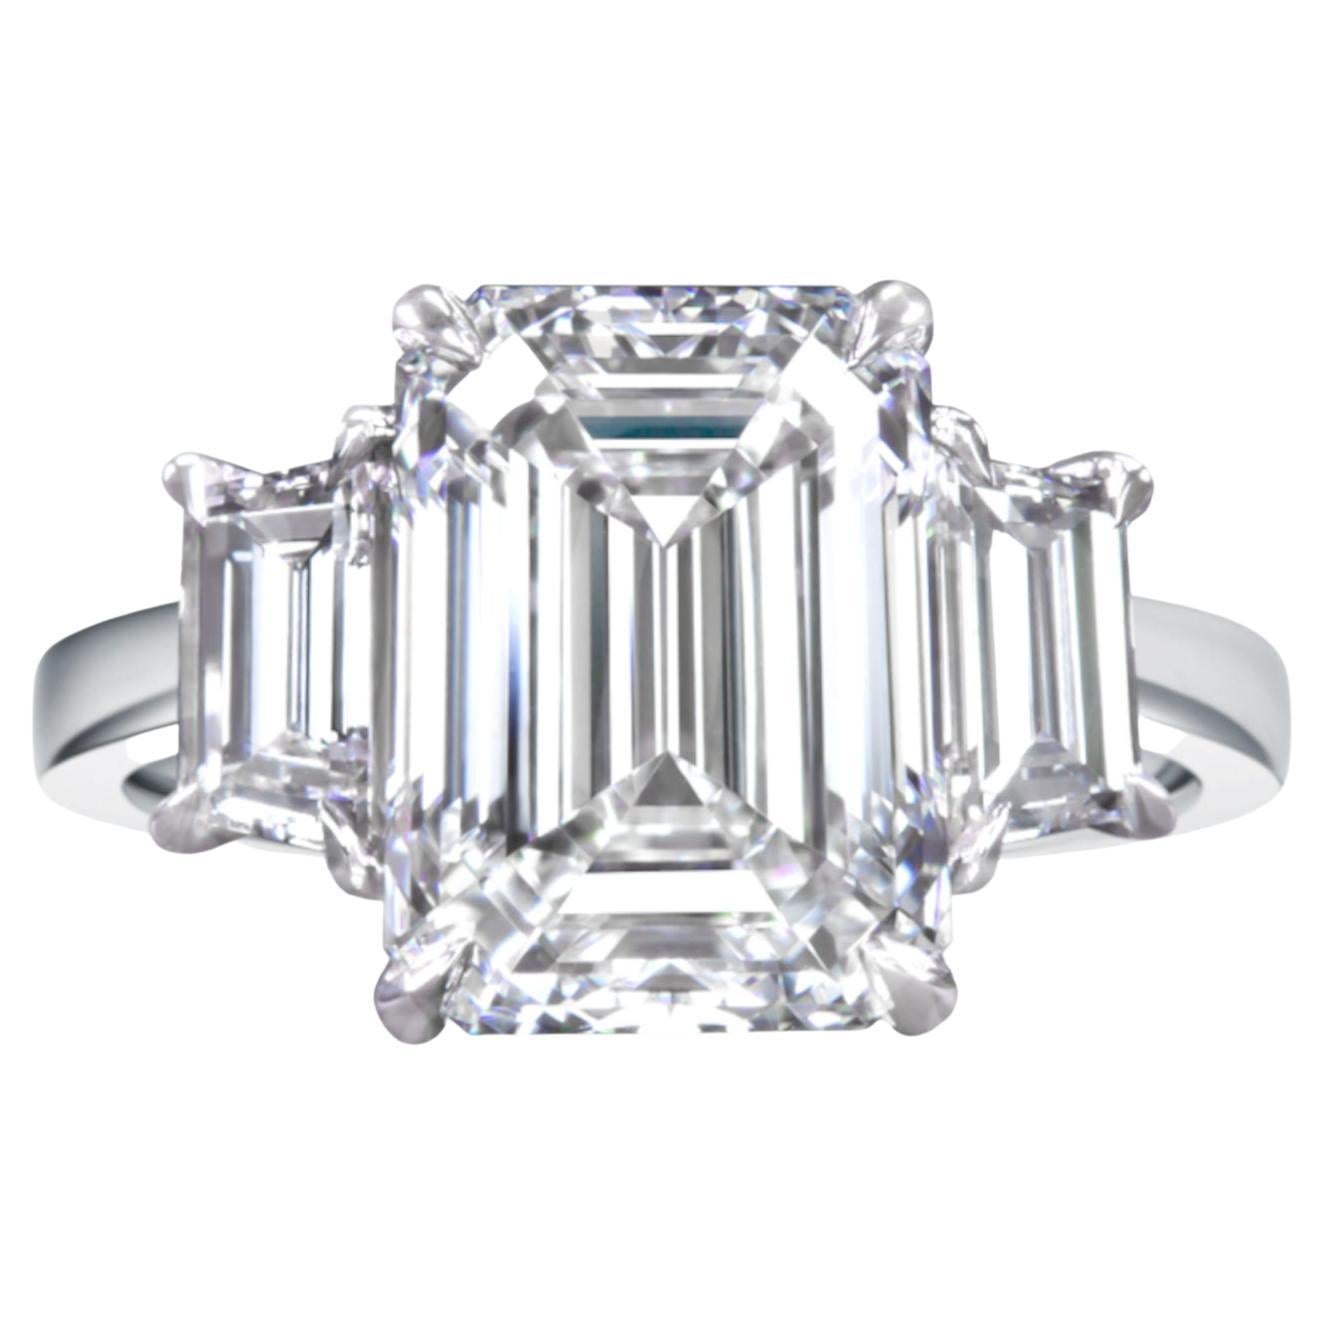 Details about   3Ct Emerald Cut VVS1 Diamond Women's Engagement Ring VVS1 14K White Gold Finish 